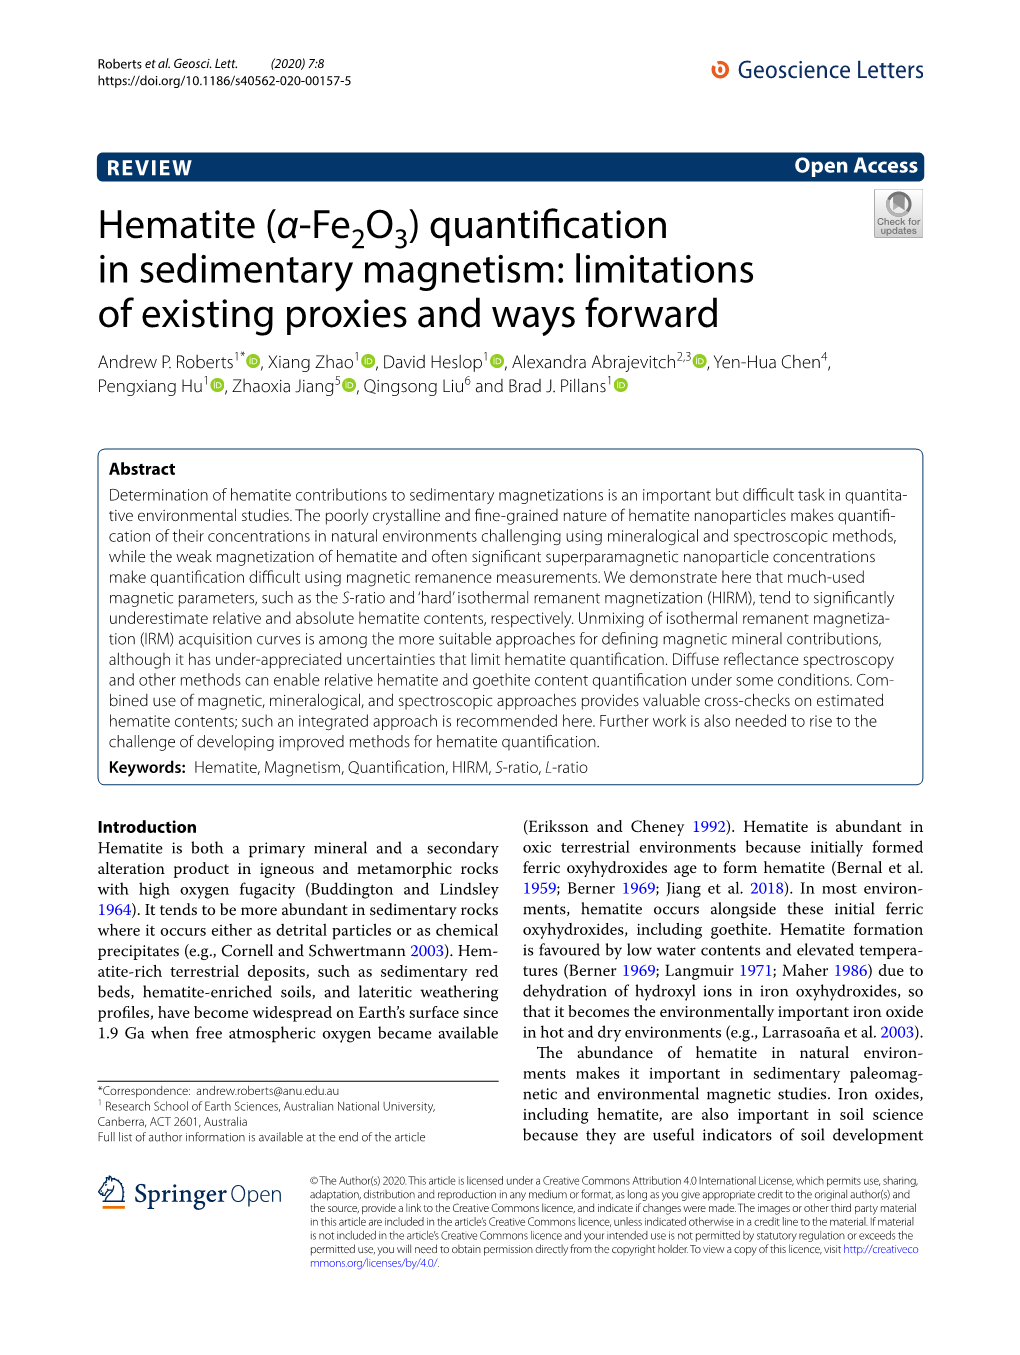 Hematite (Α-Fe2o3) Quantification in Sedimentary Magnetism